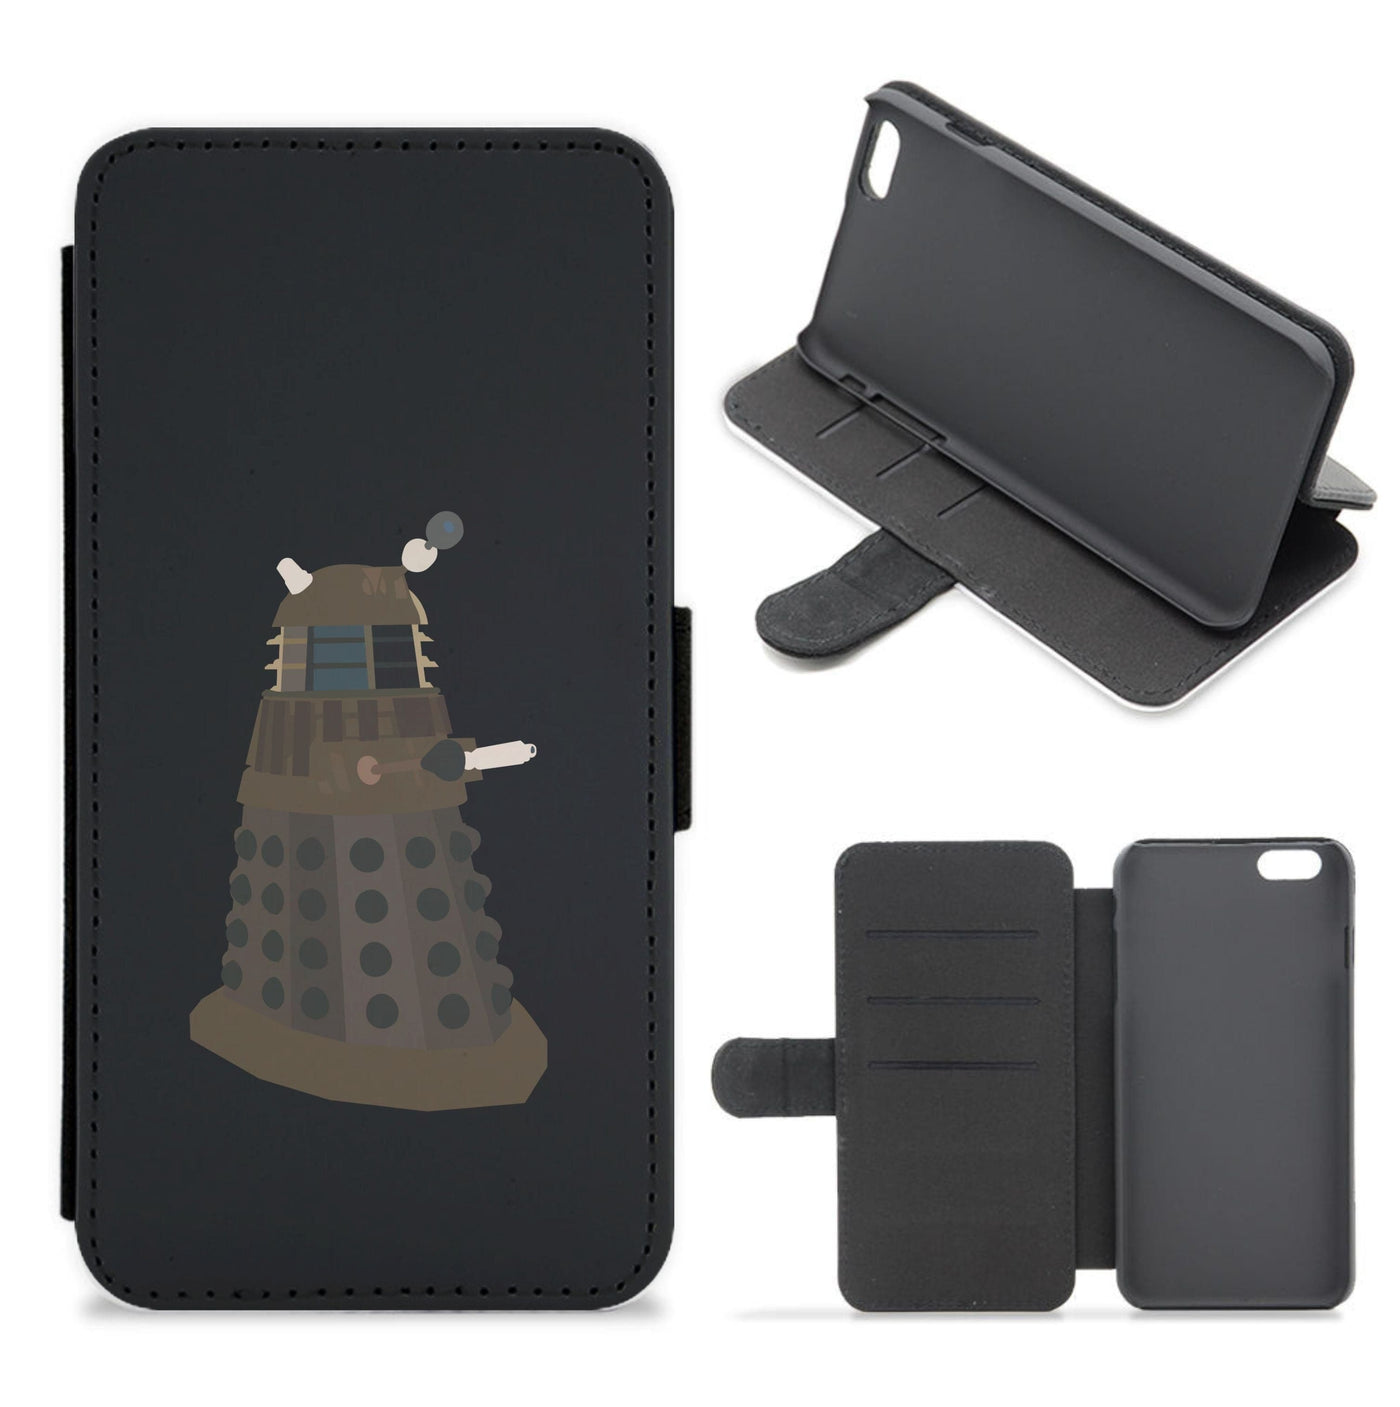 Dalek - Doctor Who Flip / Wallet Phone Case